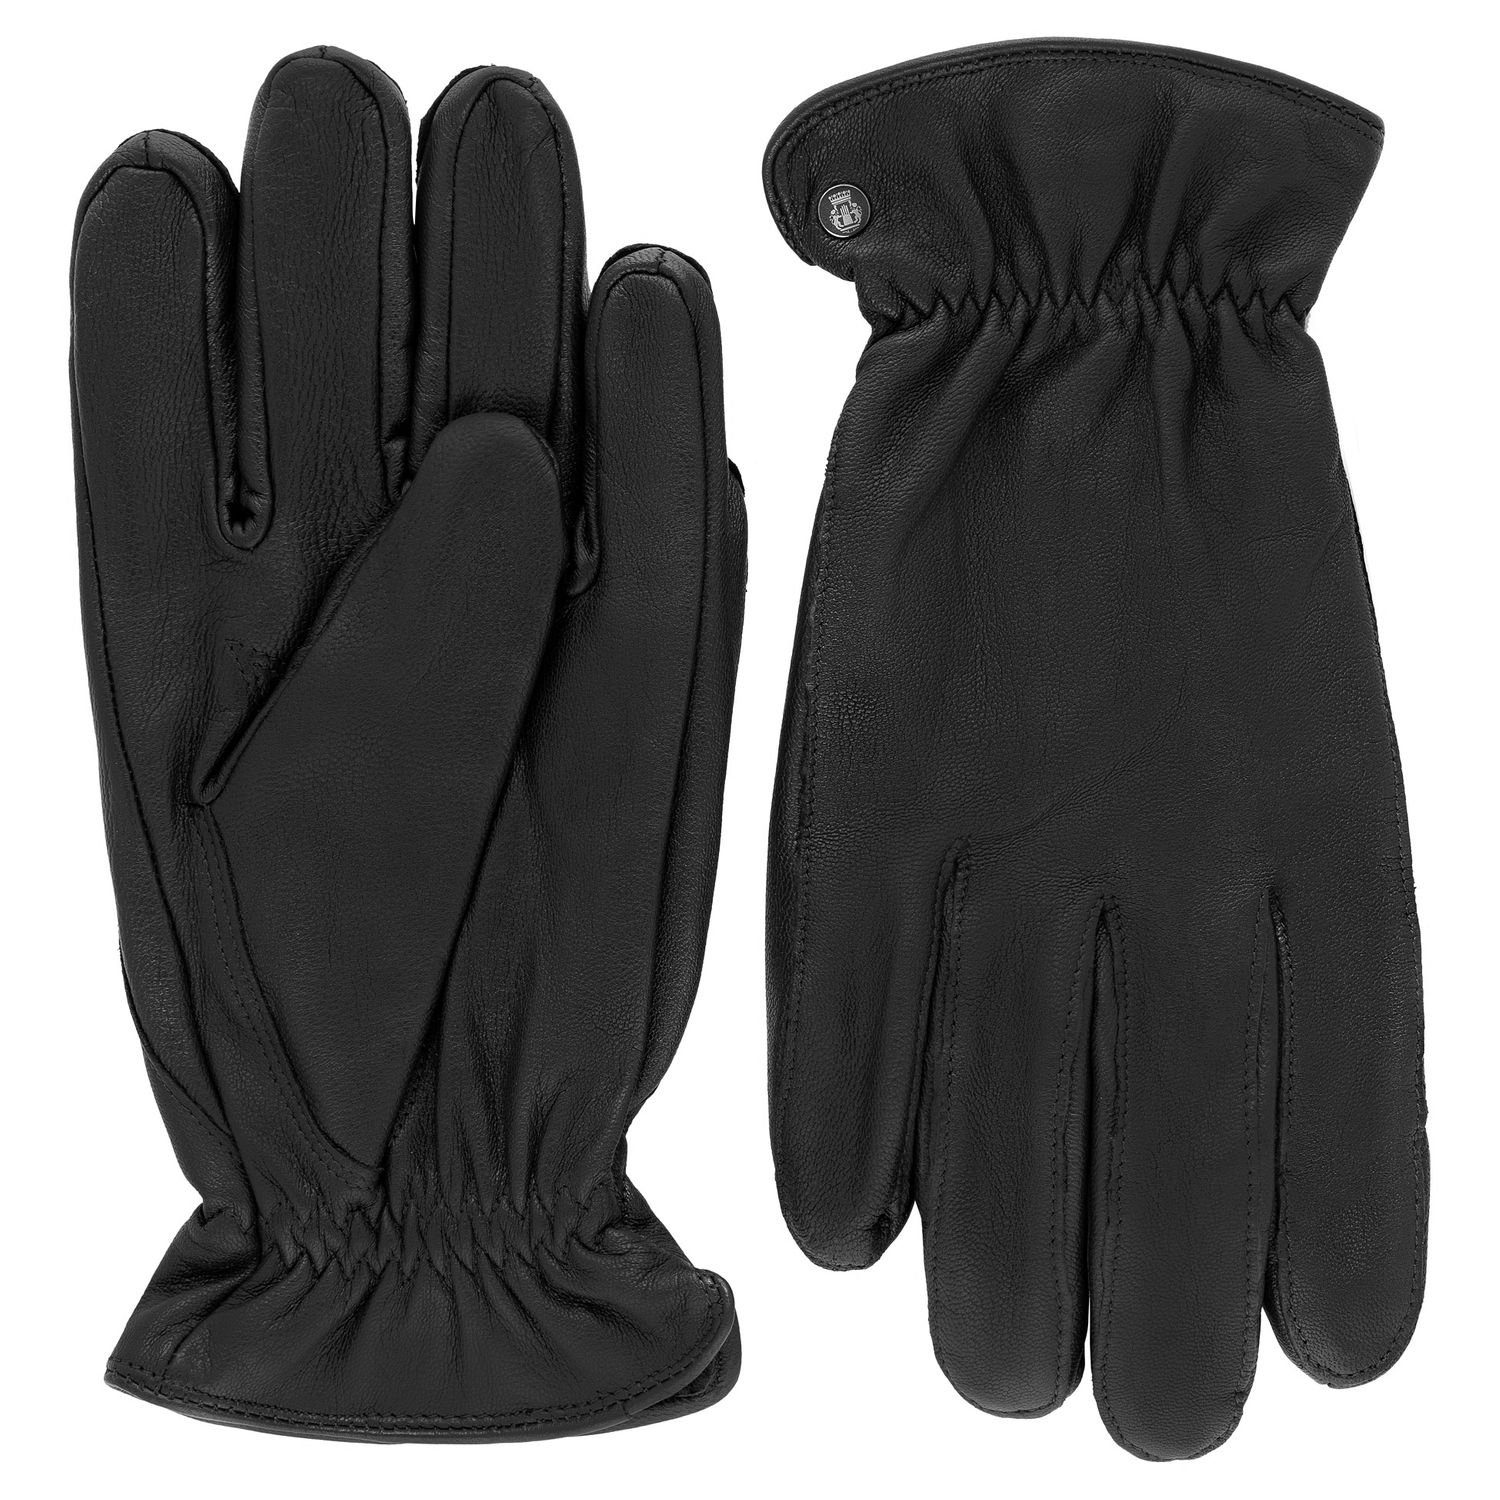 Roeckl Lederhandschuhe Roeckl Herren sportive Leder Handschuhe mit Fleece Futter 000-black